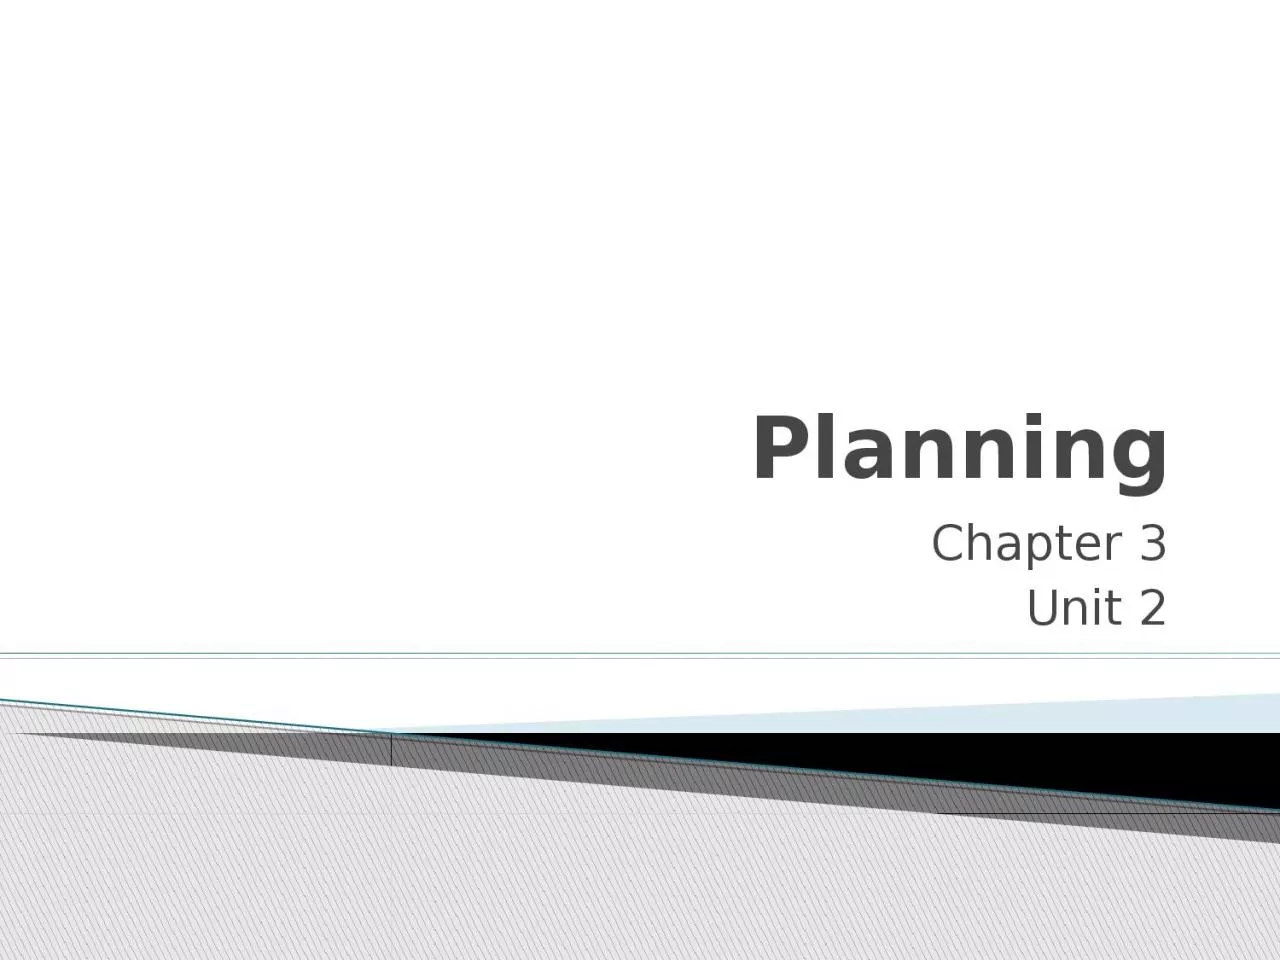 Planning Chapter 3 Unit 2